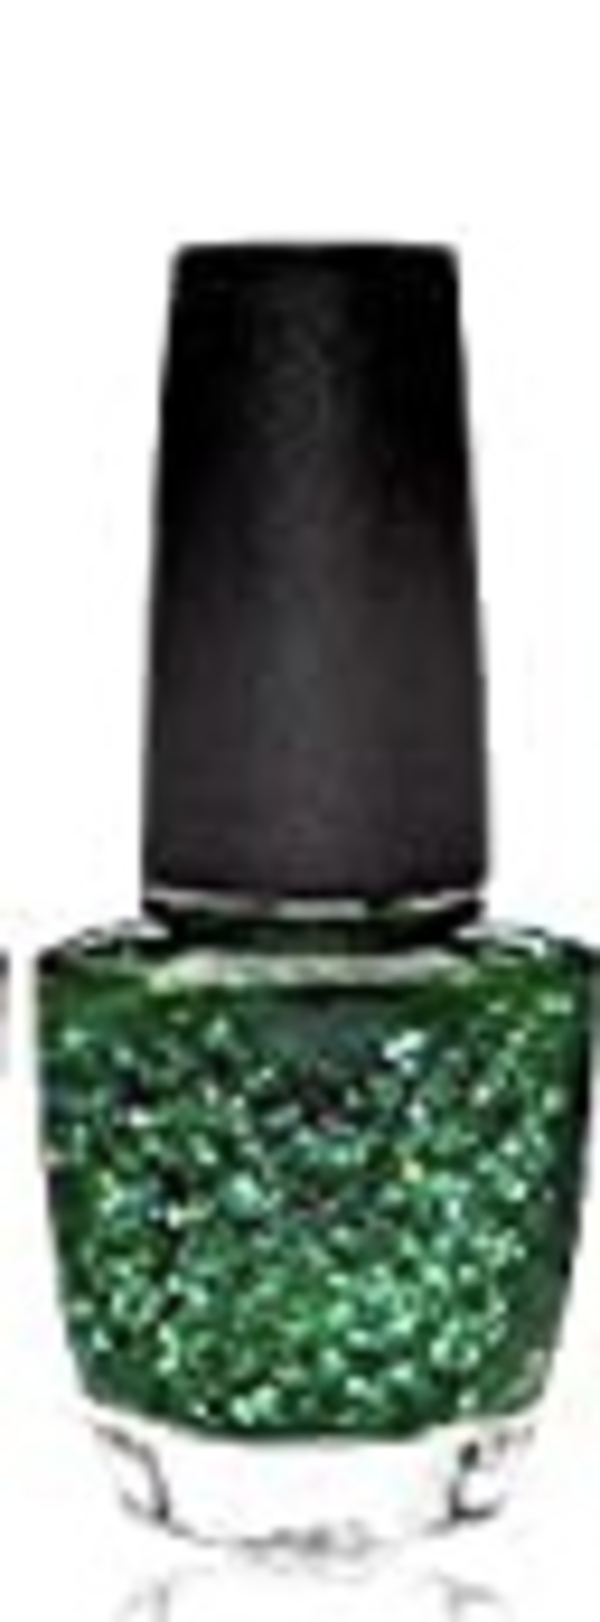 Nail polish swatch / manicure of shade Nanacoco Emerald